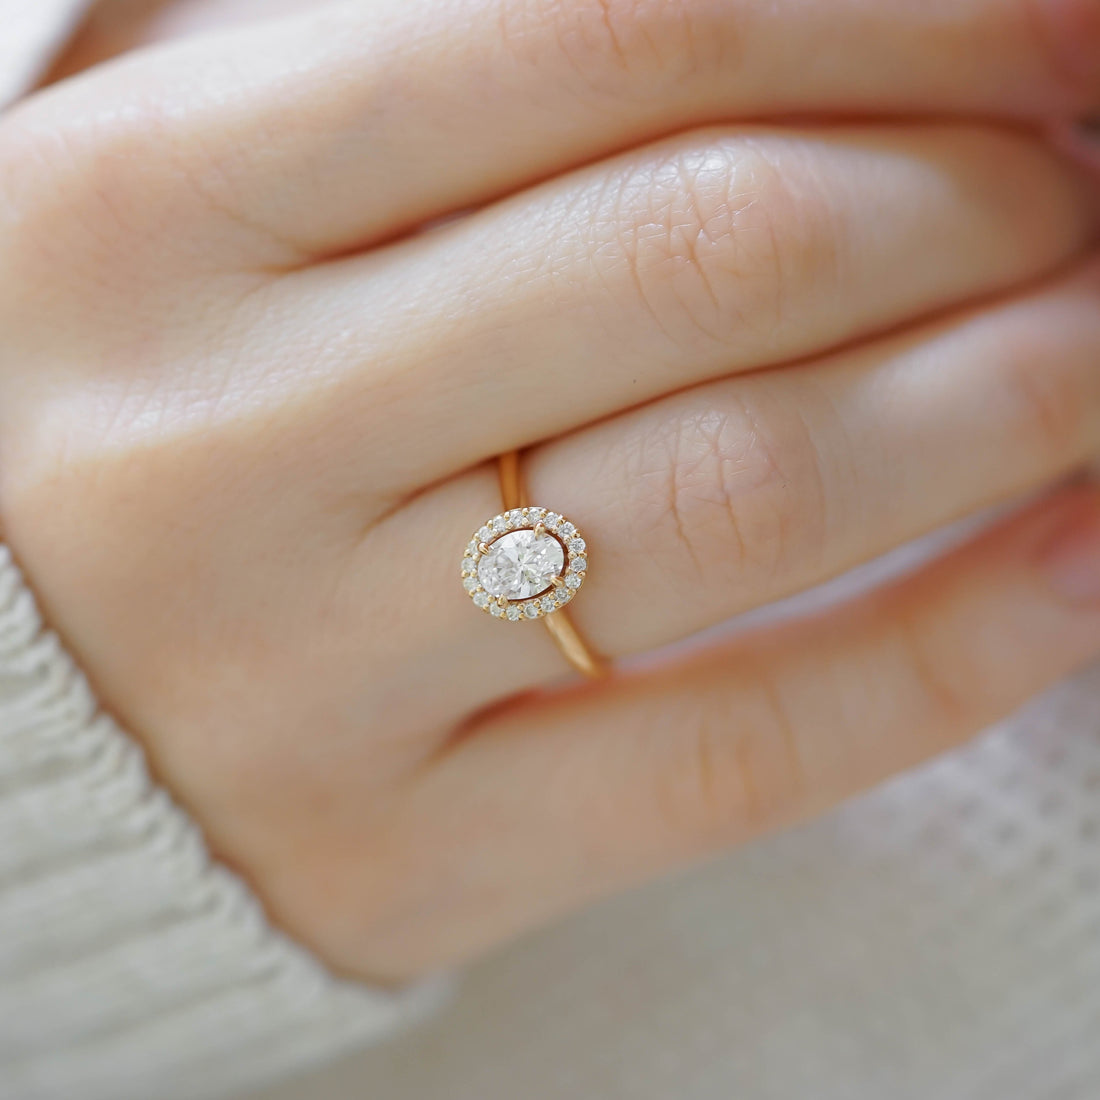 burcu-okut-jewellery-jewelry-designer-vintage-oval-diamond-engagement-ring-18K-solid-gold-proposal-natural-gem-stone-ring-woman-man-elegant